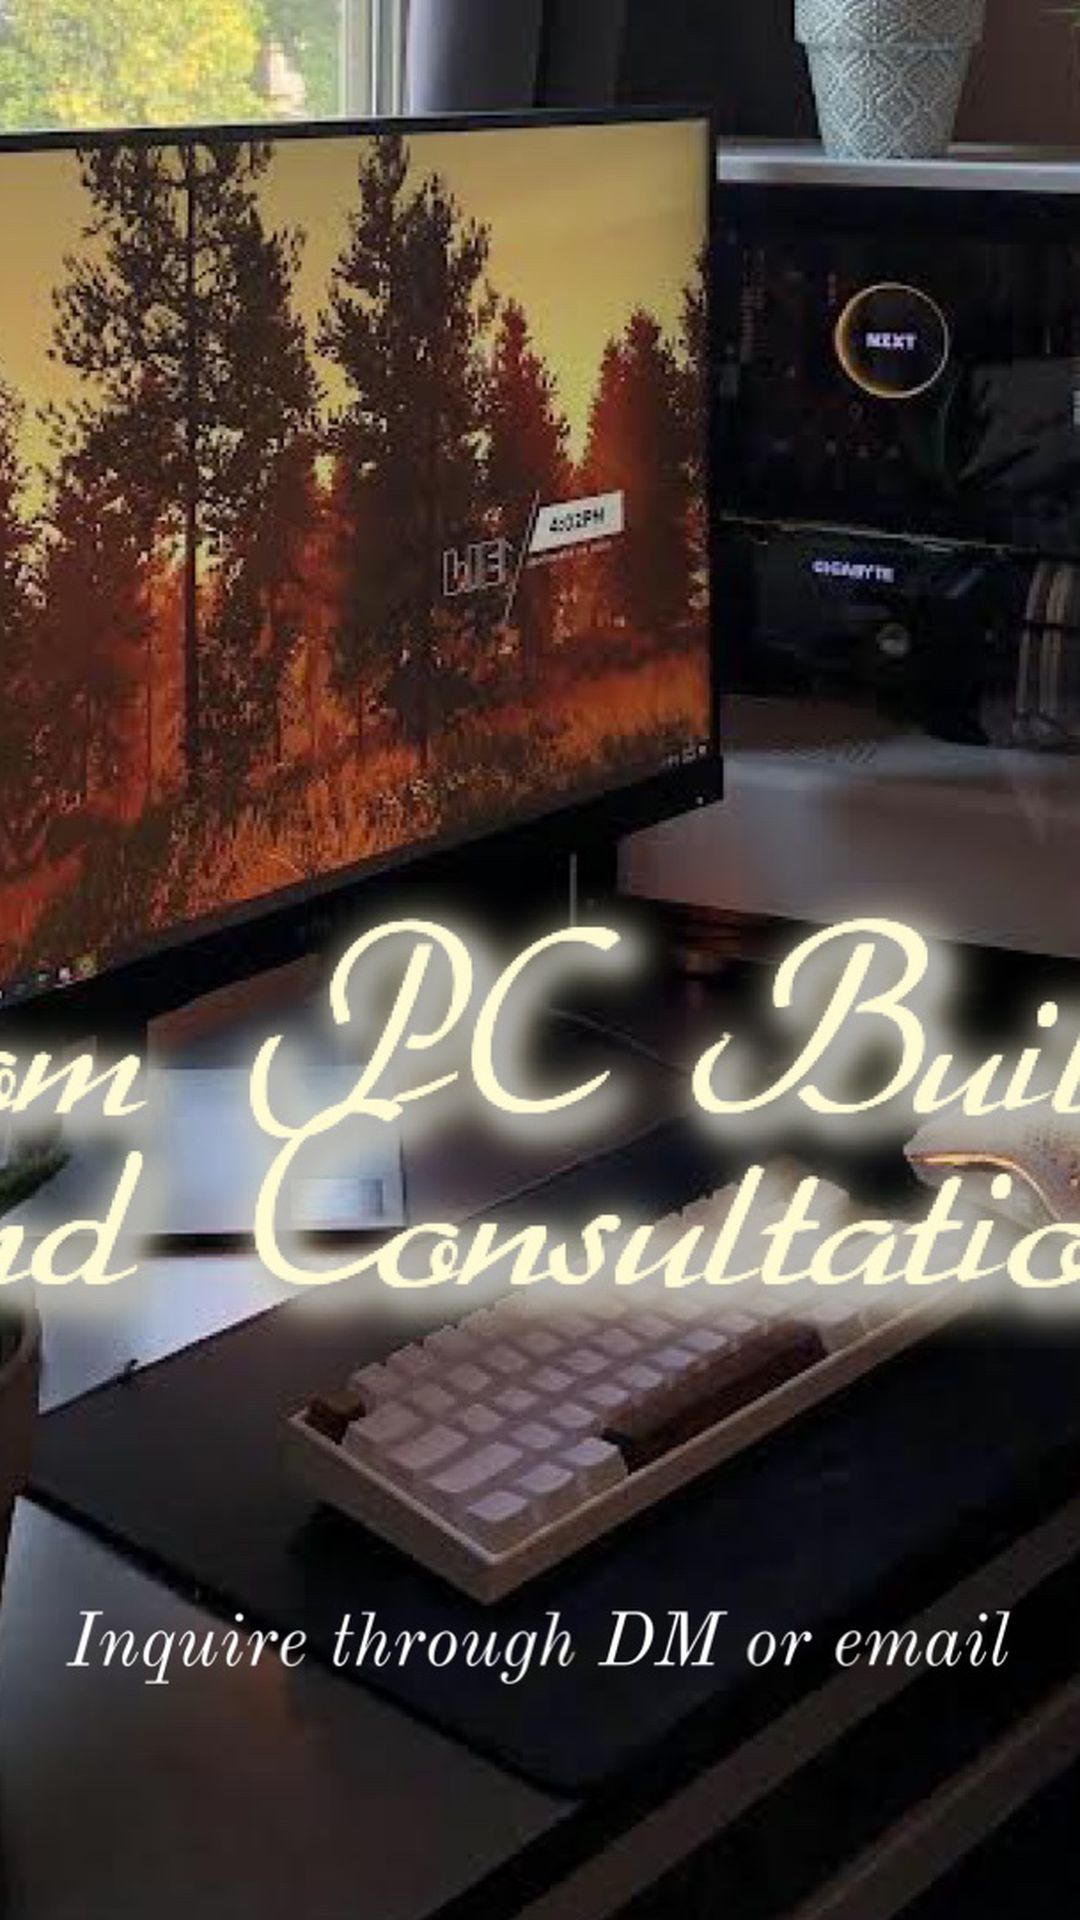 CUSTOM PC BUILDS